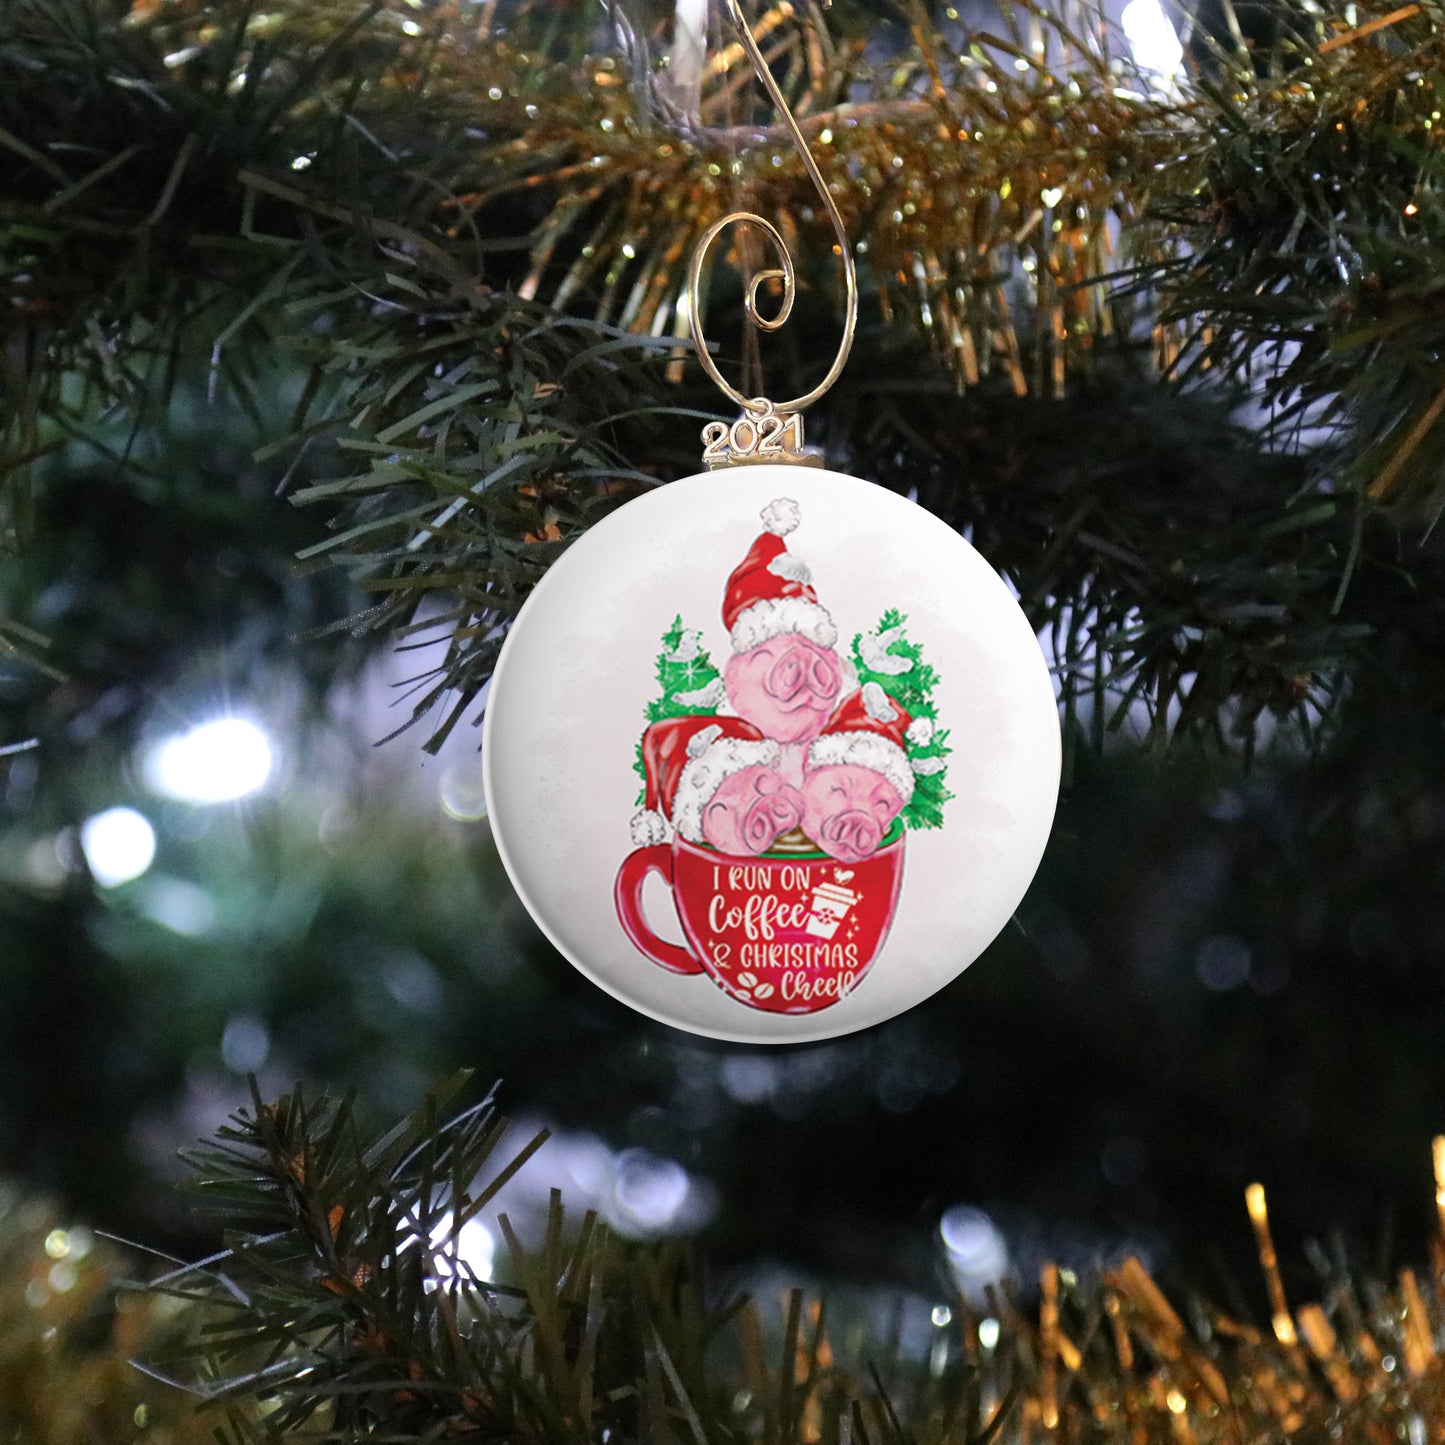 I Run on Coffee and Christmas Cheer Three Pigs Ornament